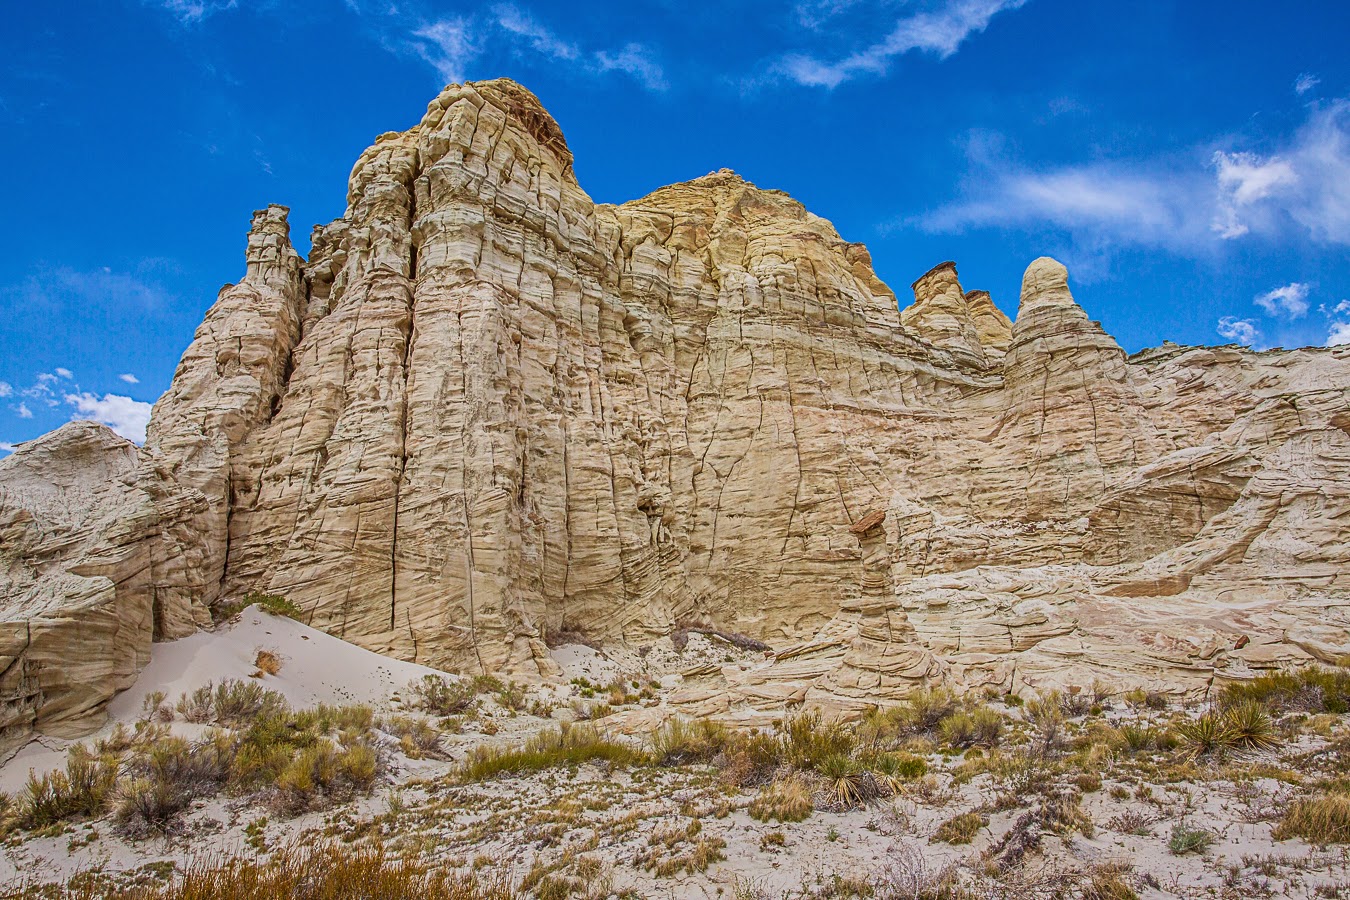 Utah White Rock